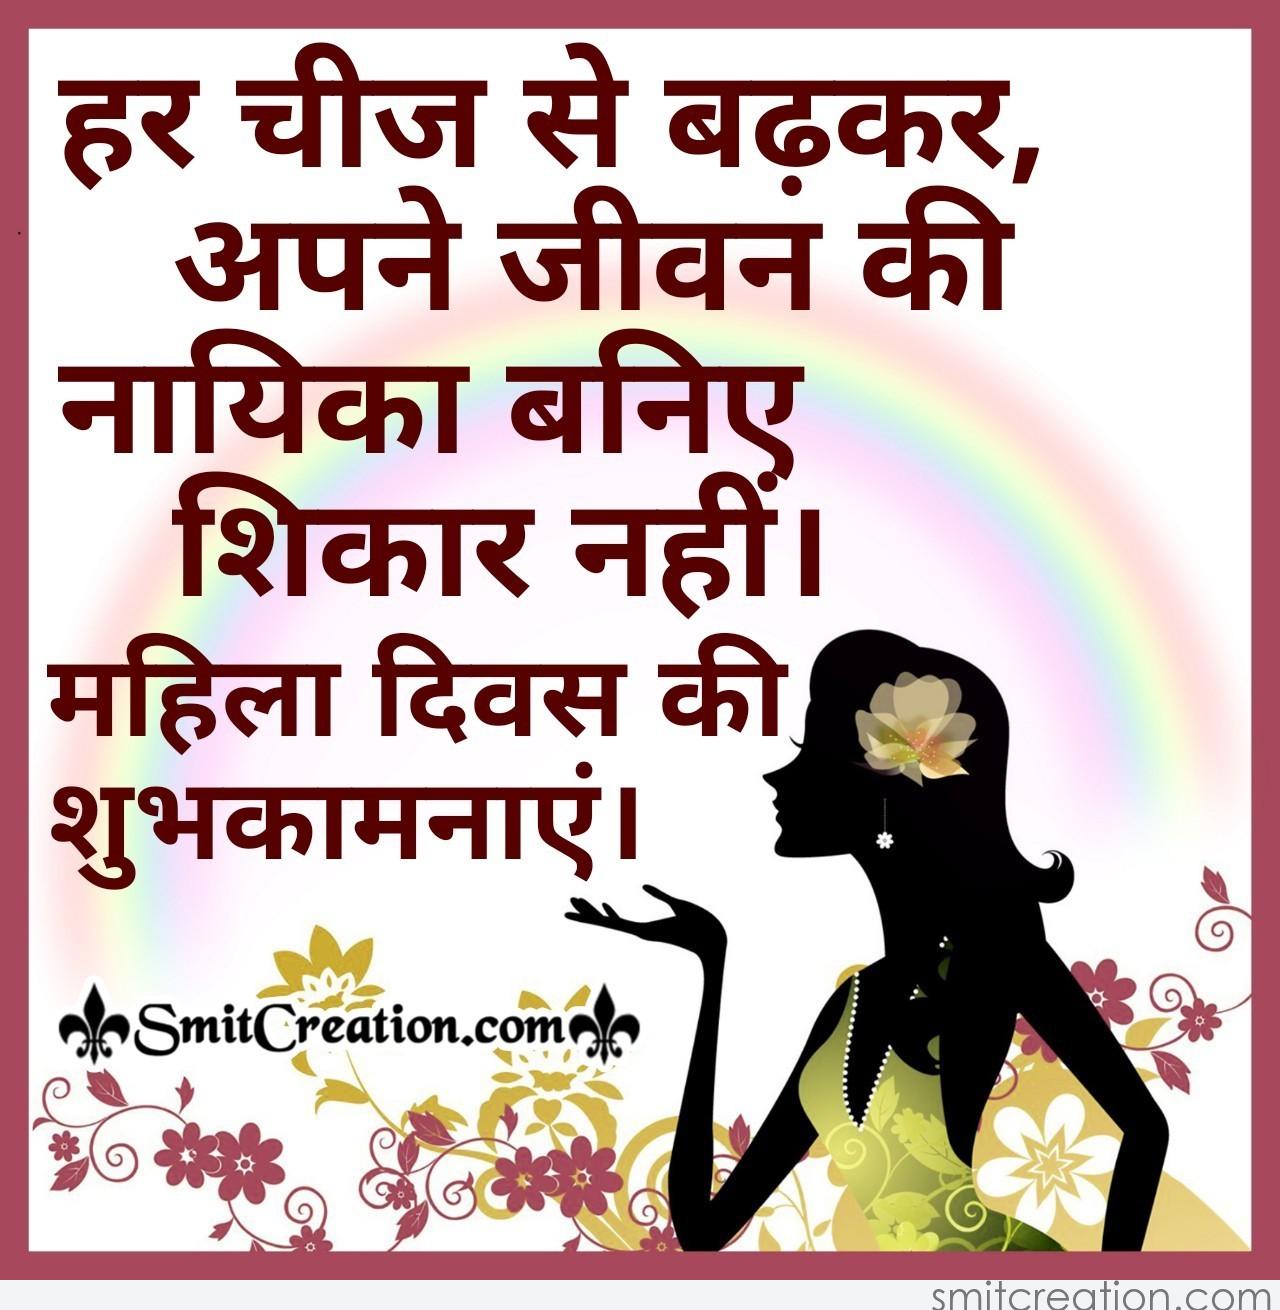 Women's Day Quote In Hindi - SmitCreation.com